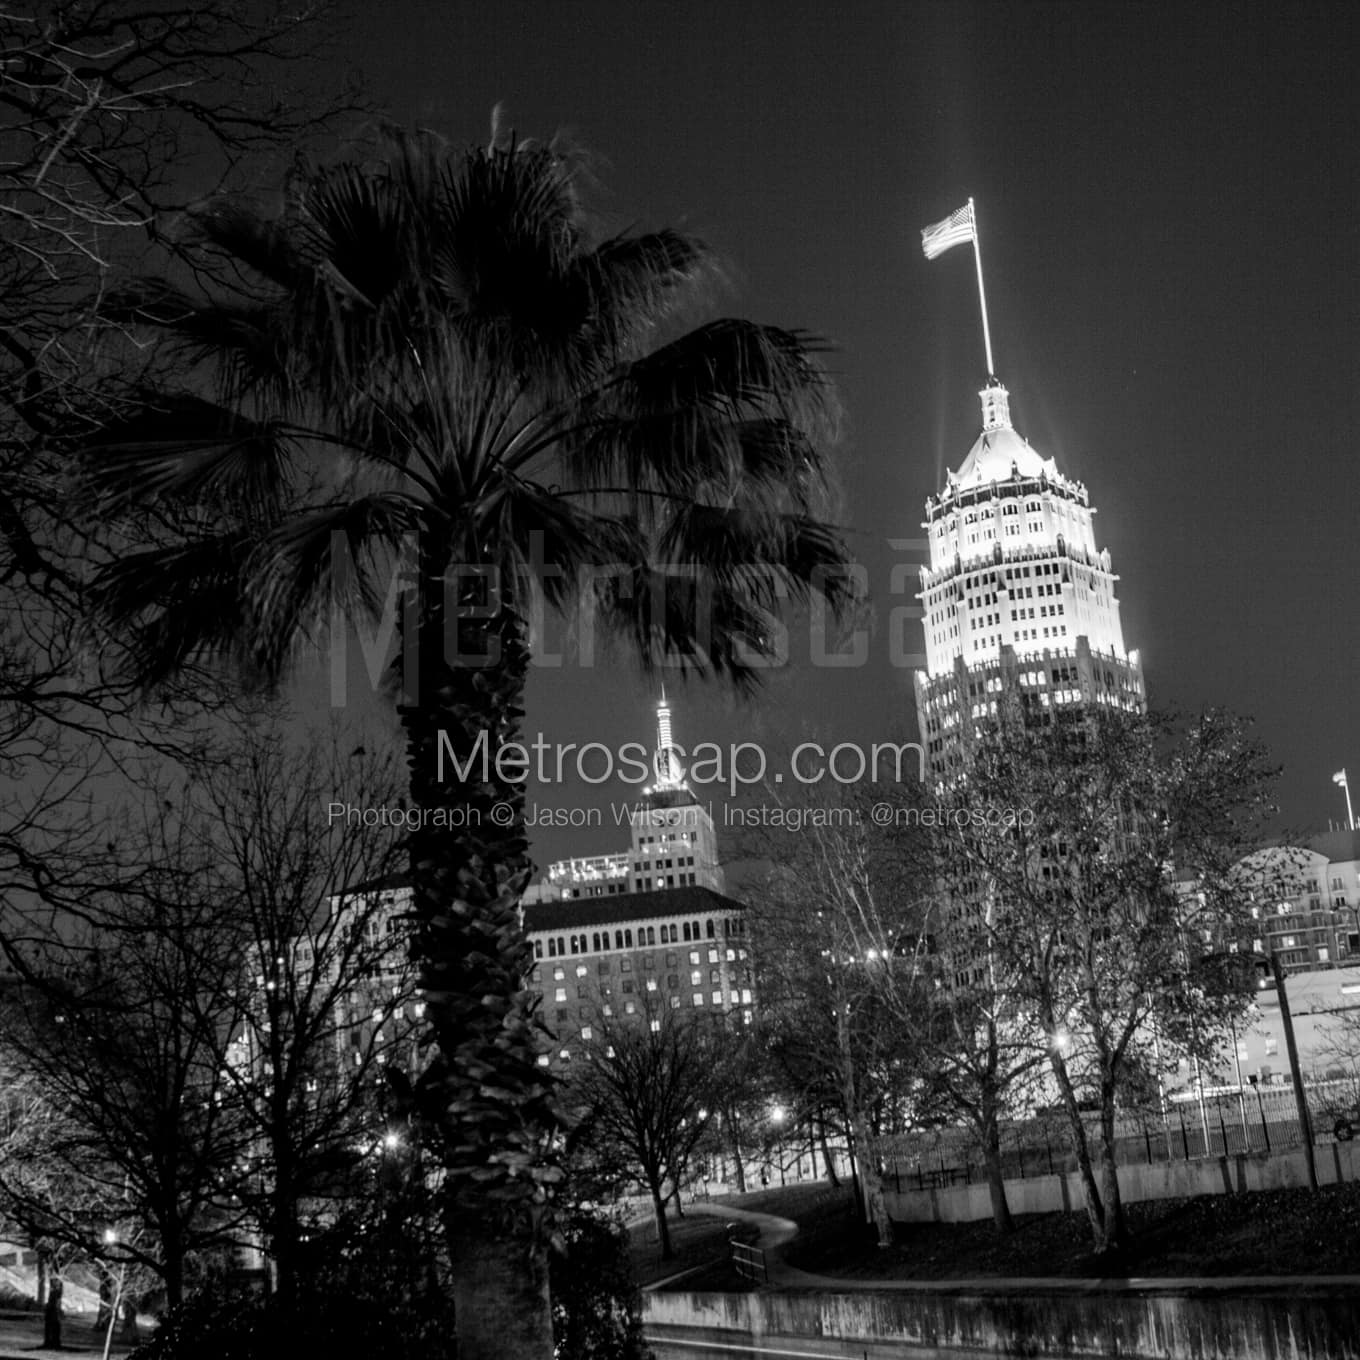 San Antonio Black & White Landscape Photography